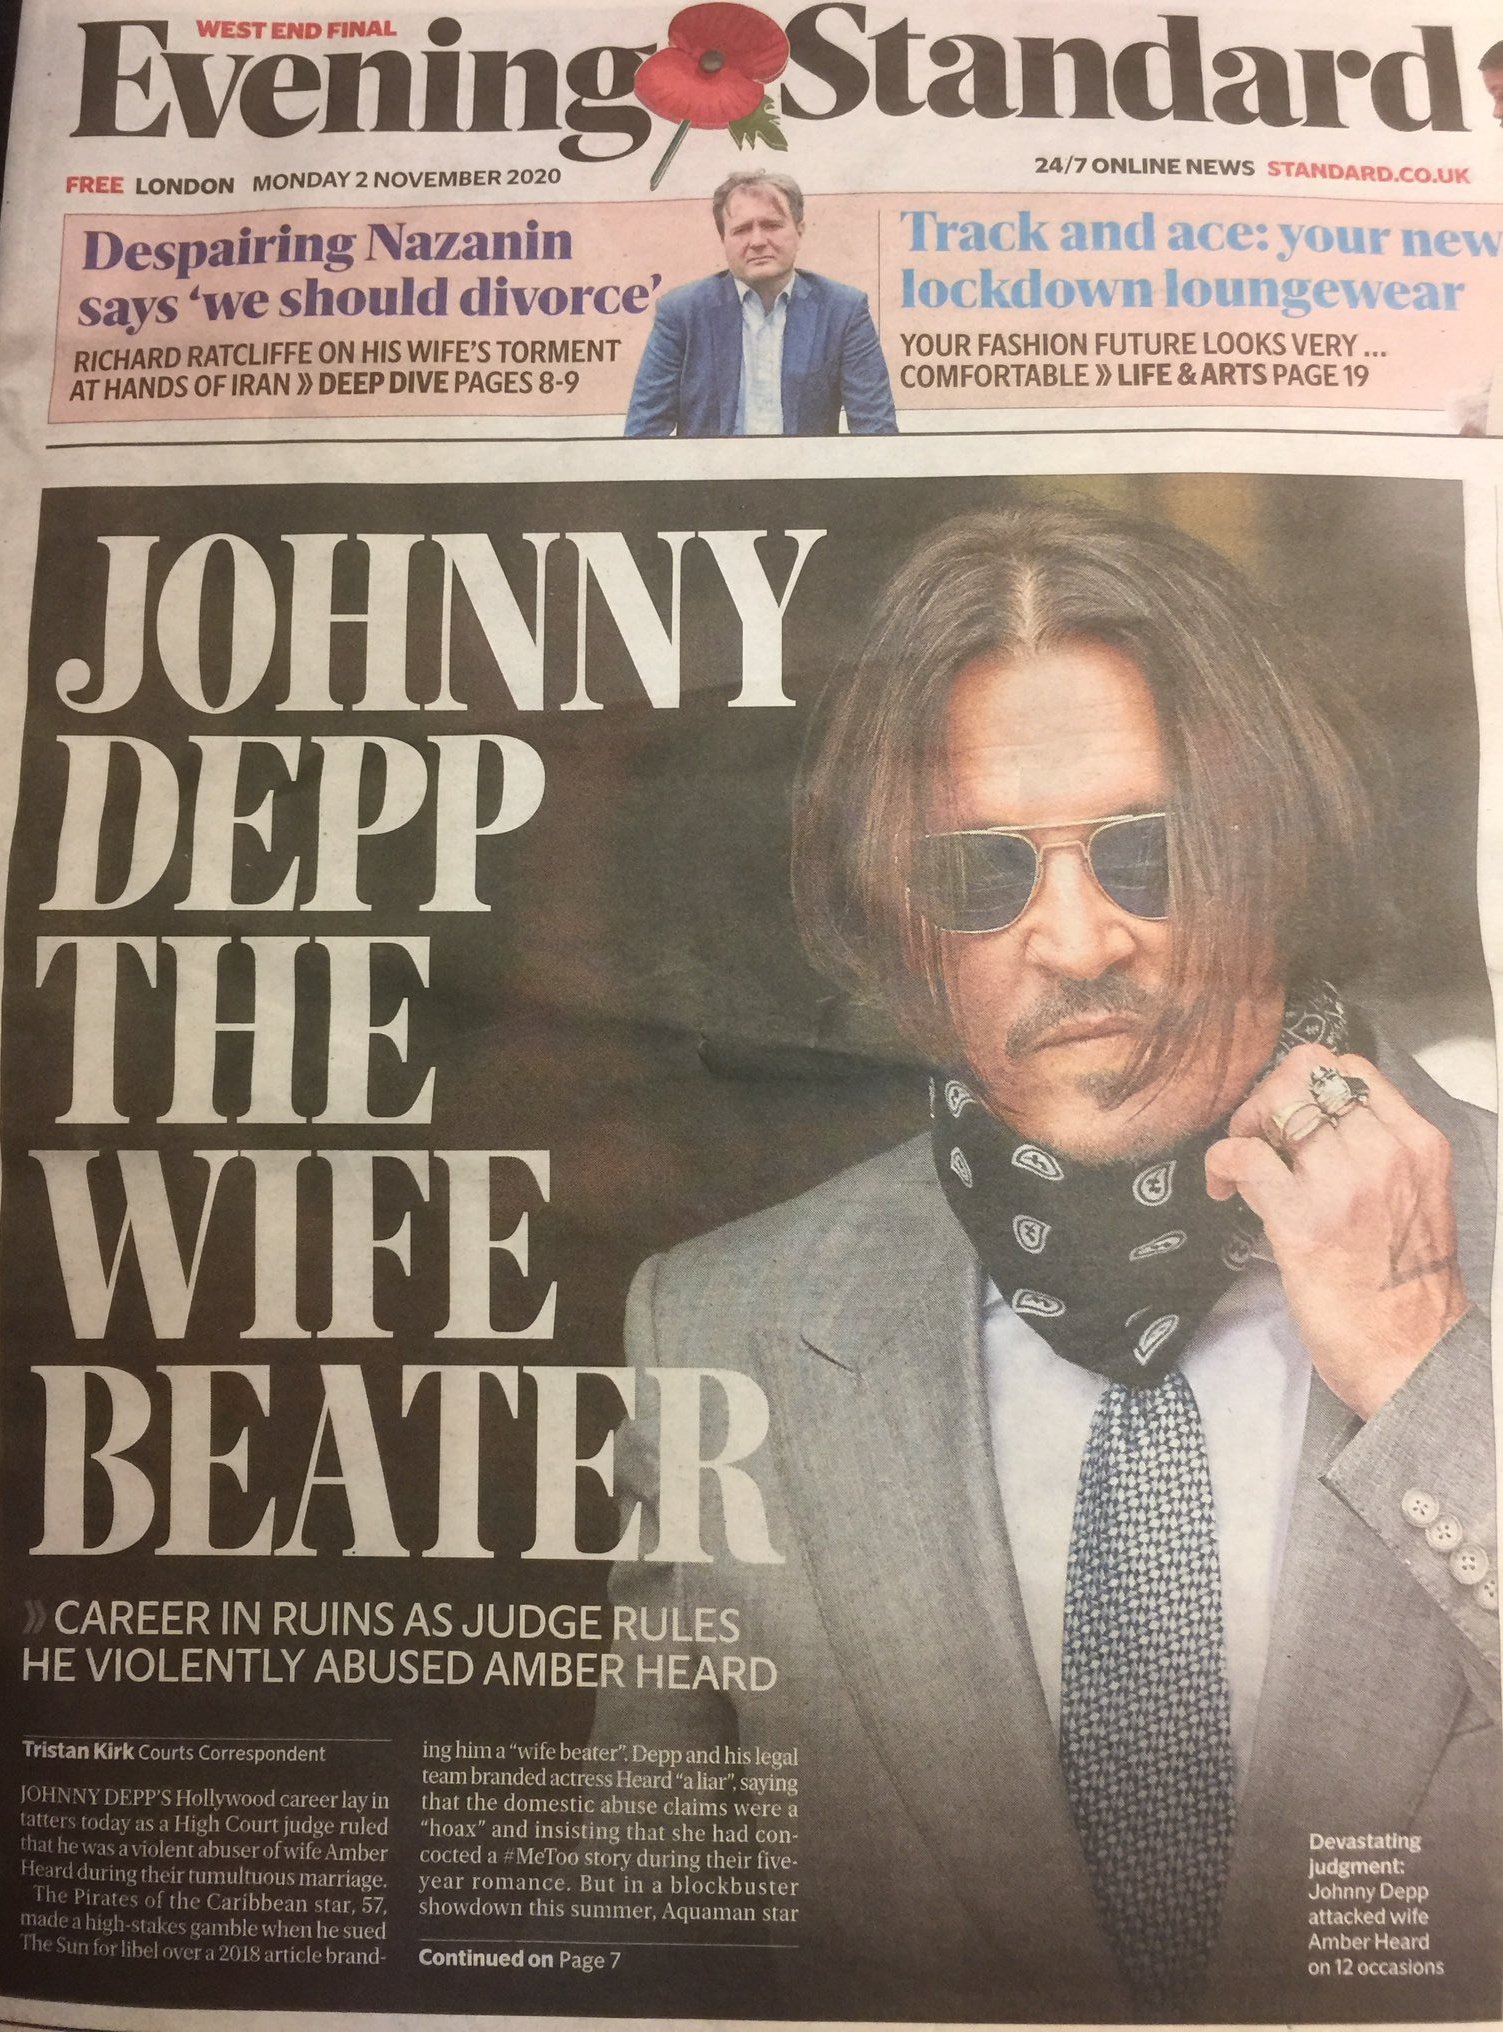 Mening Arkæolog Recite Amber Heard Italia| Fan Account on Twitter: "Johnny Depp The Wife Beater...  This is the tweet ⬇️ #JohnnyDeppisawifebeater #JusticeForAmberHeard  #wearewithyouamberheard #JohnnyDeppIsAnAbuser https://t.co/4qvhmATvFD" /  Twitter